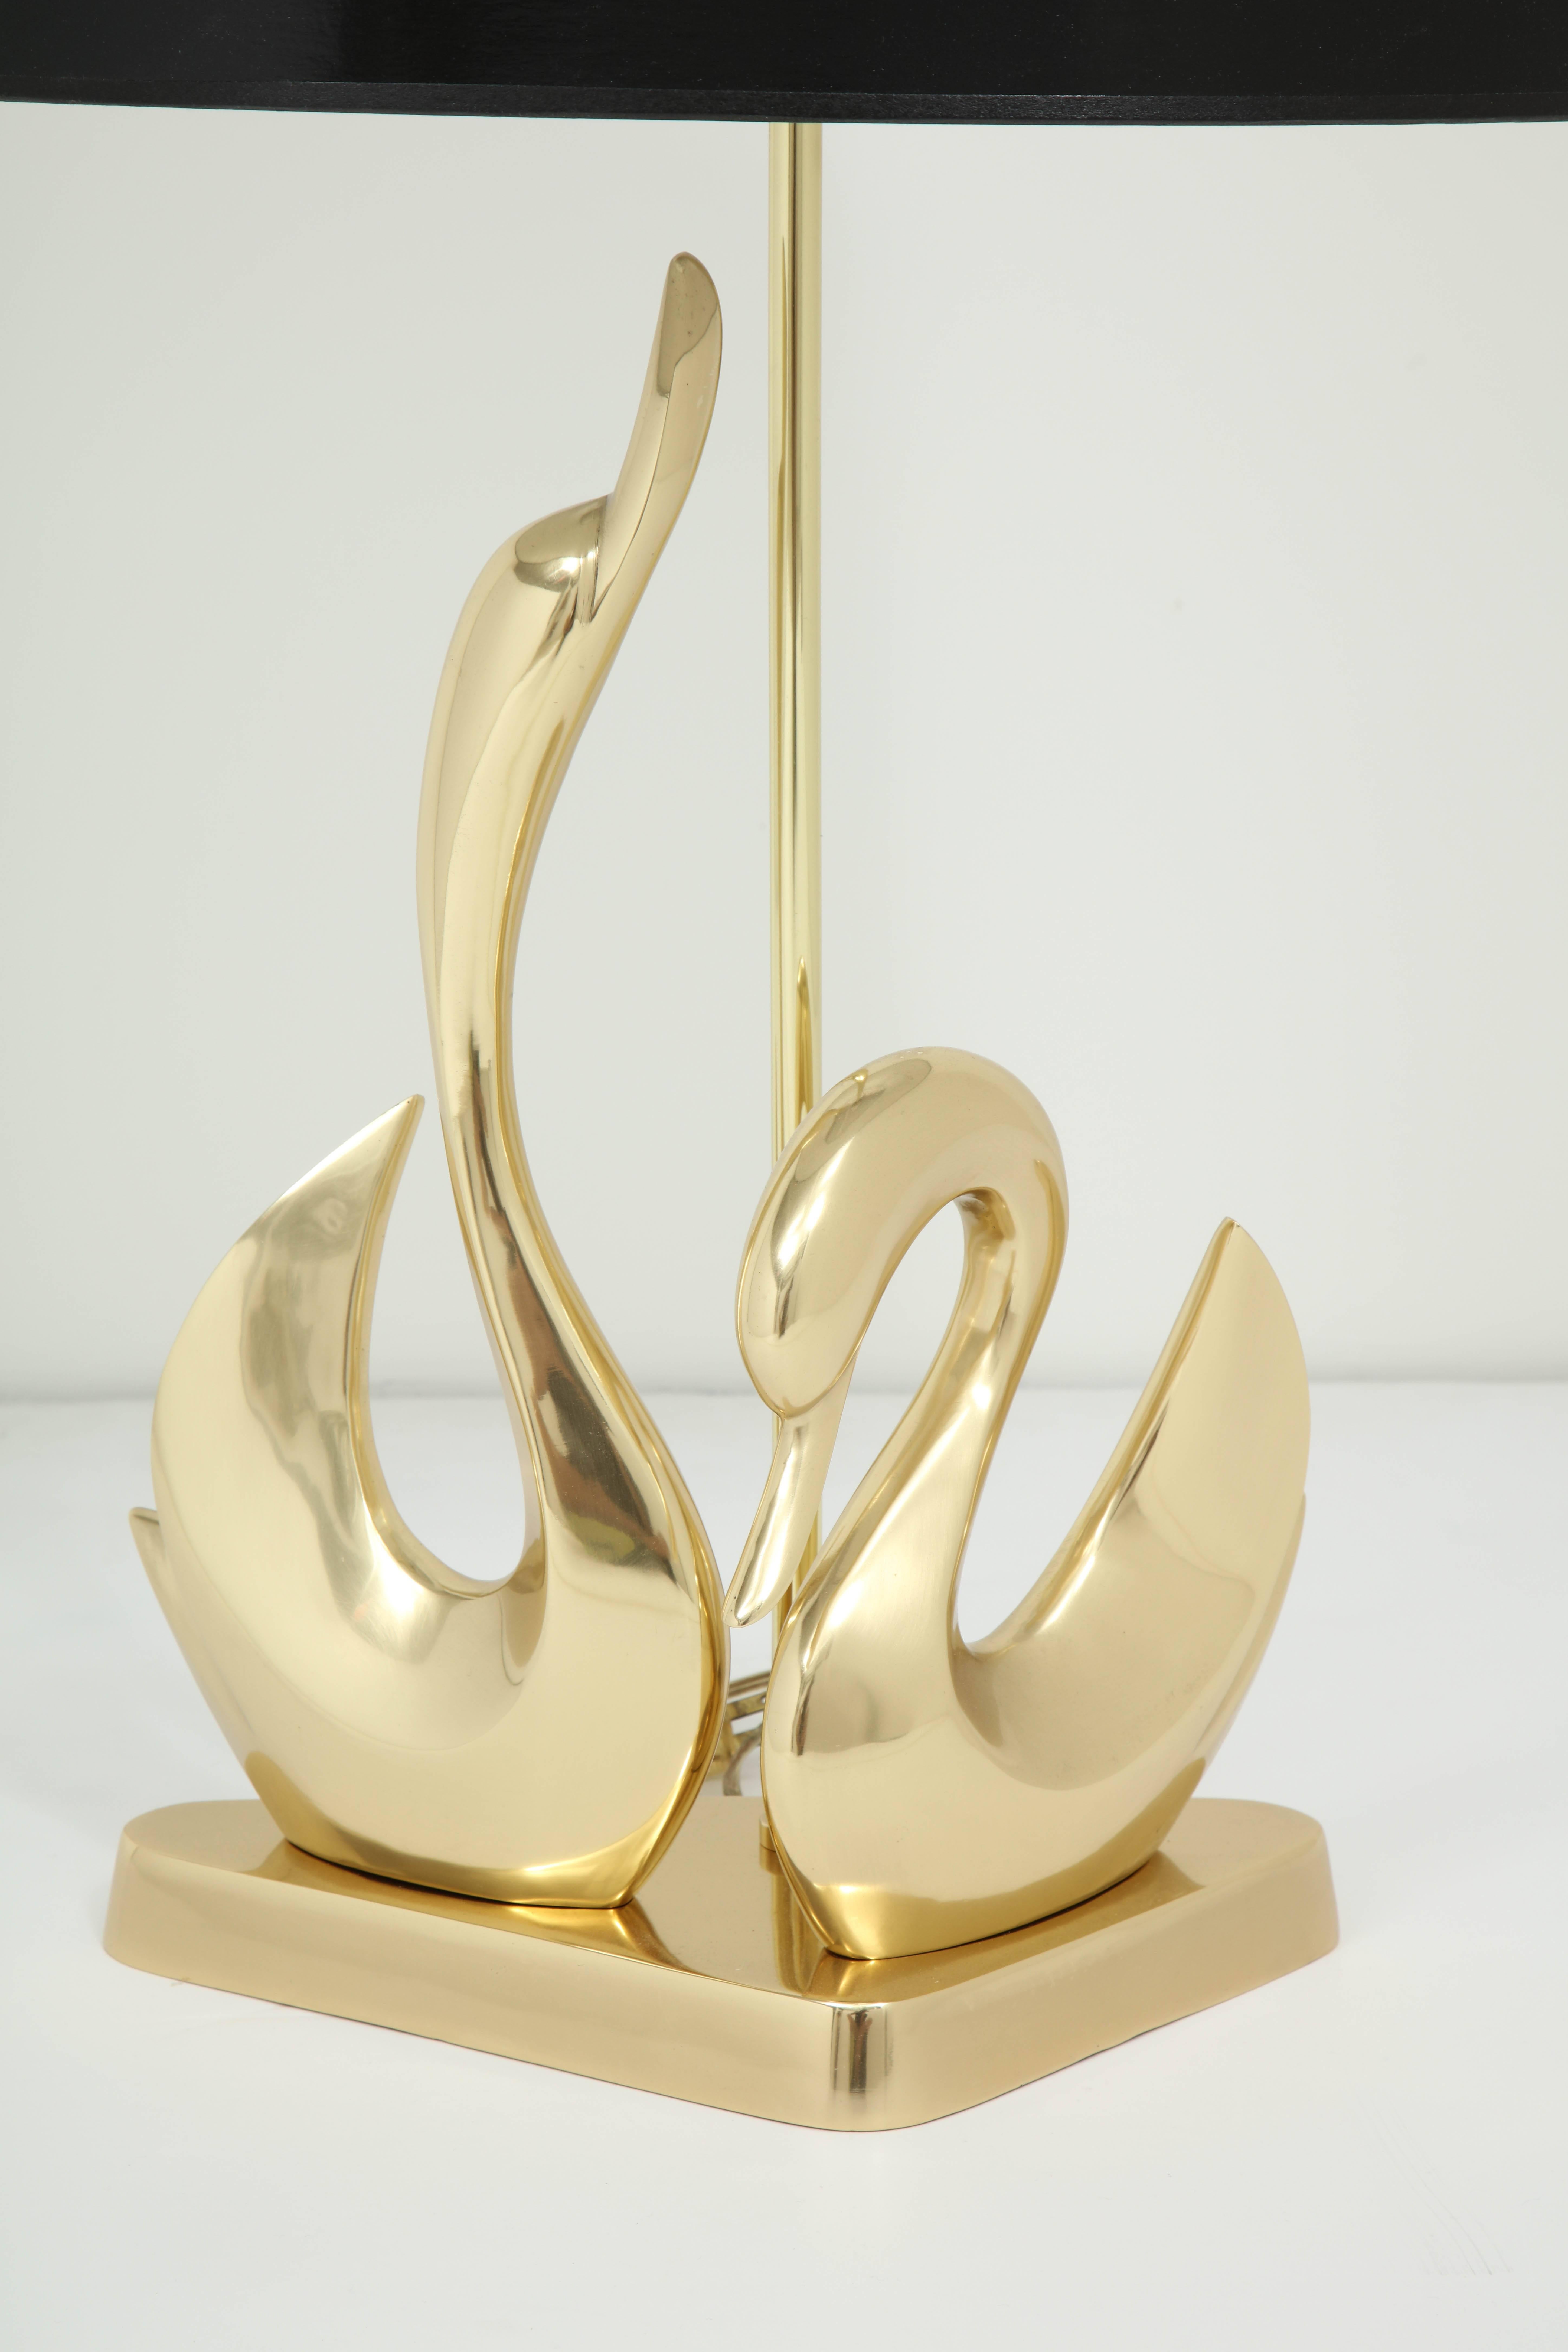 Italian Table Lamp, Mid-Century Modern Lamp, Brass Swans, circa 1950, Brass, Polished